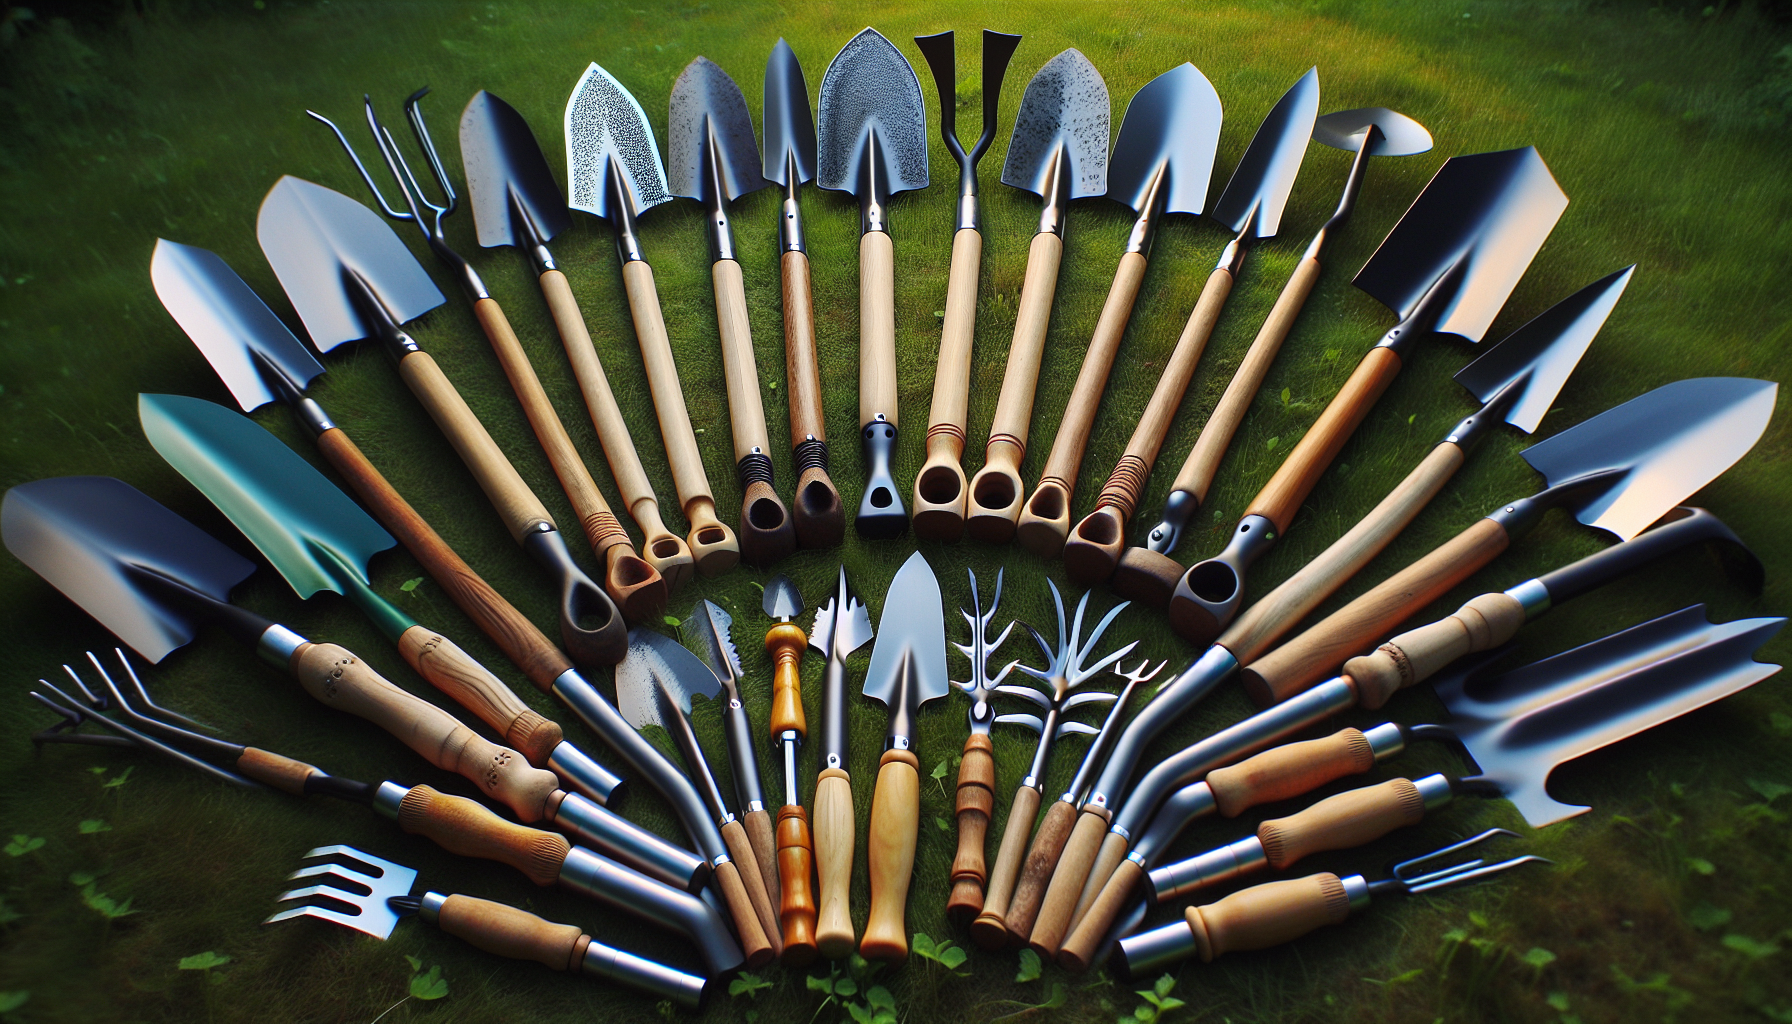 Various types of garden spades and digging shovels